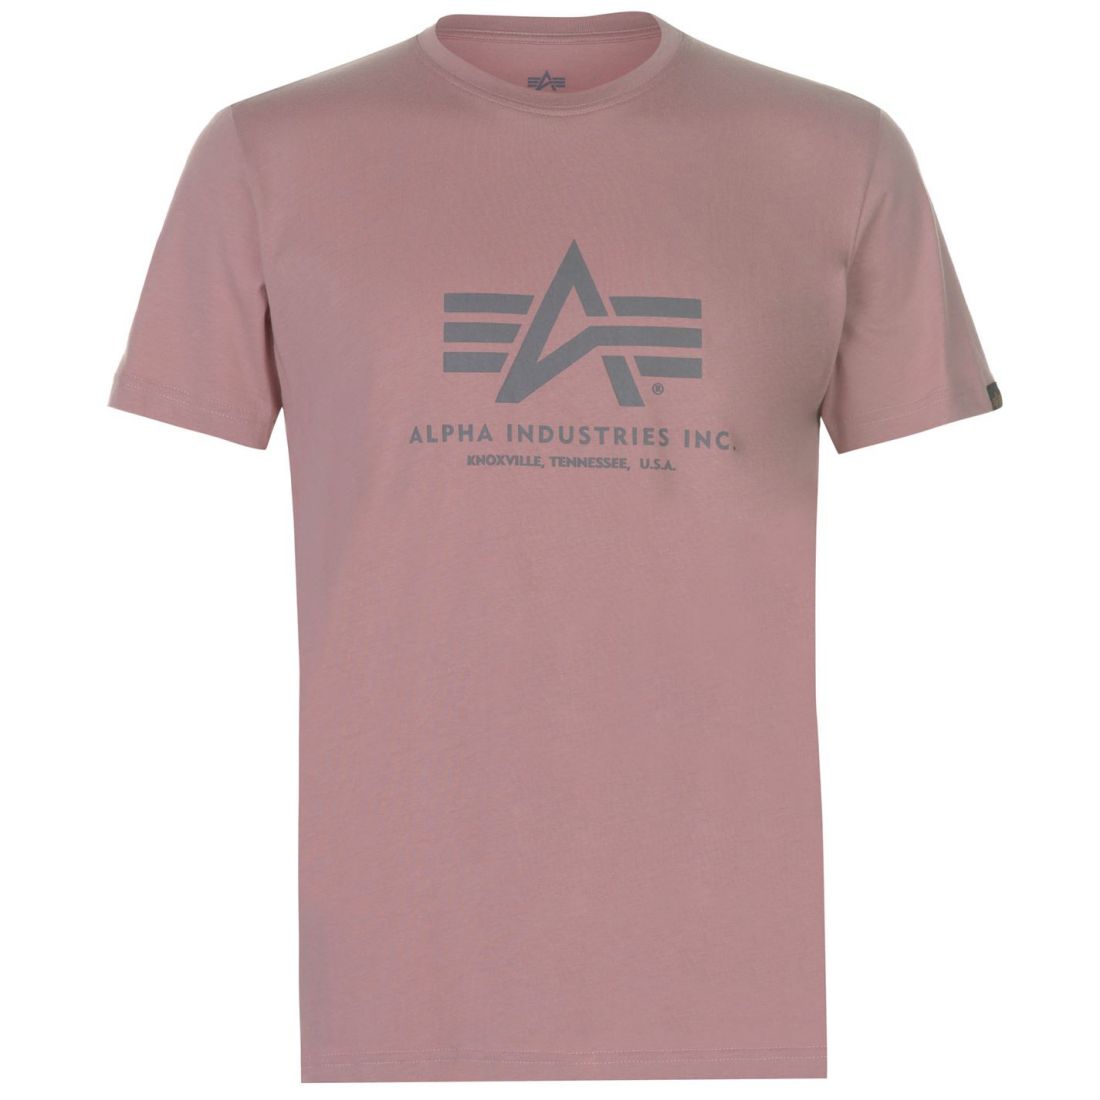 Mens Alpha Industries Basic Tee Crew Neck Shirt Short Sleeve New | eBay